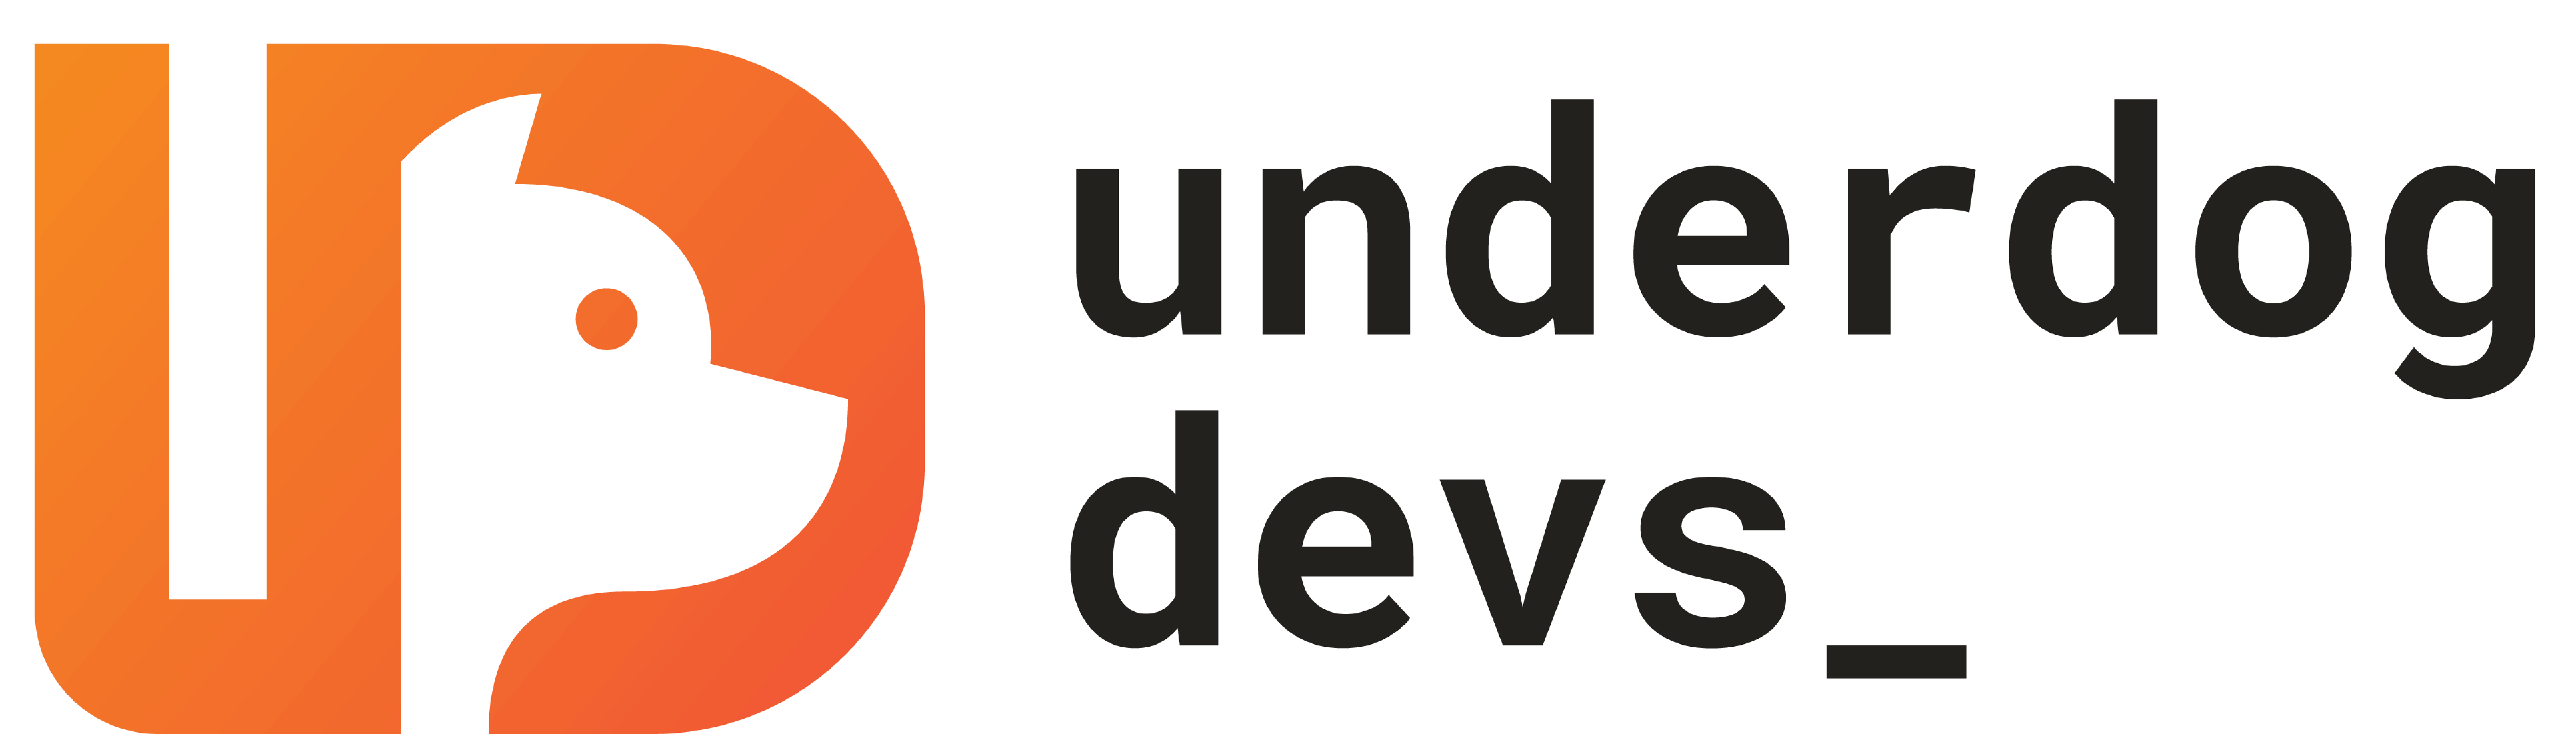 Underdog Devs logo long